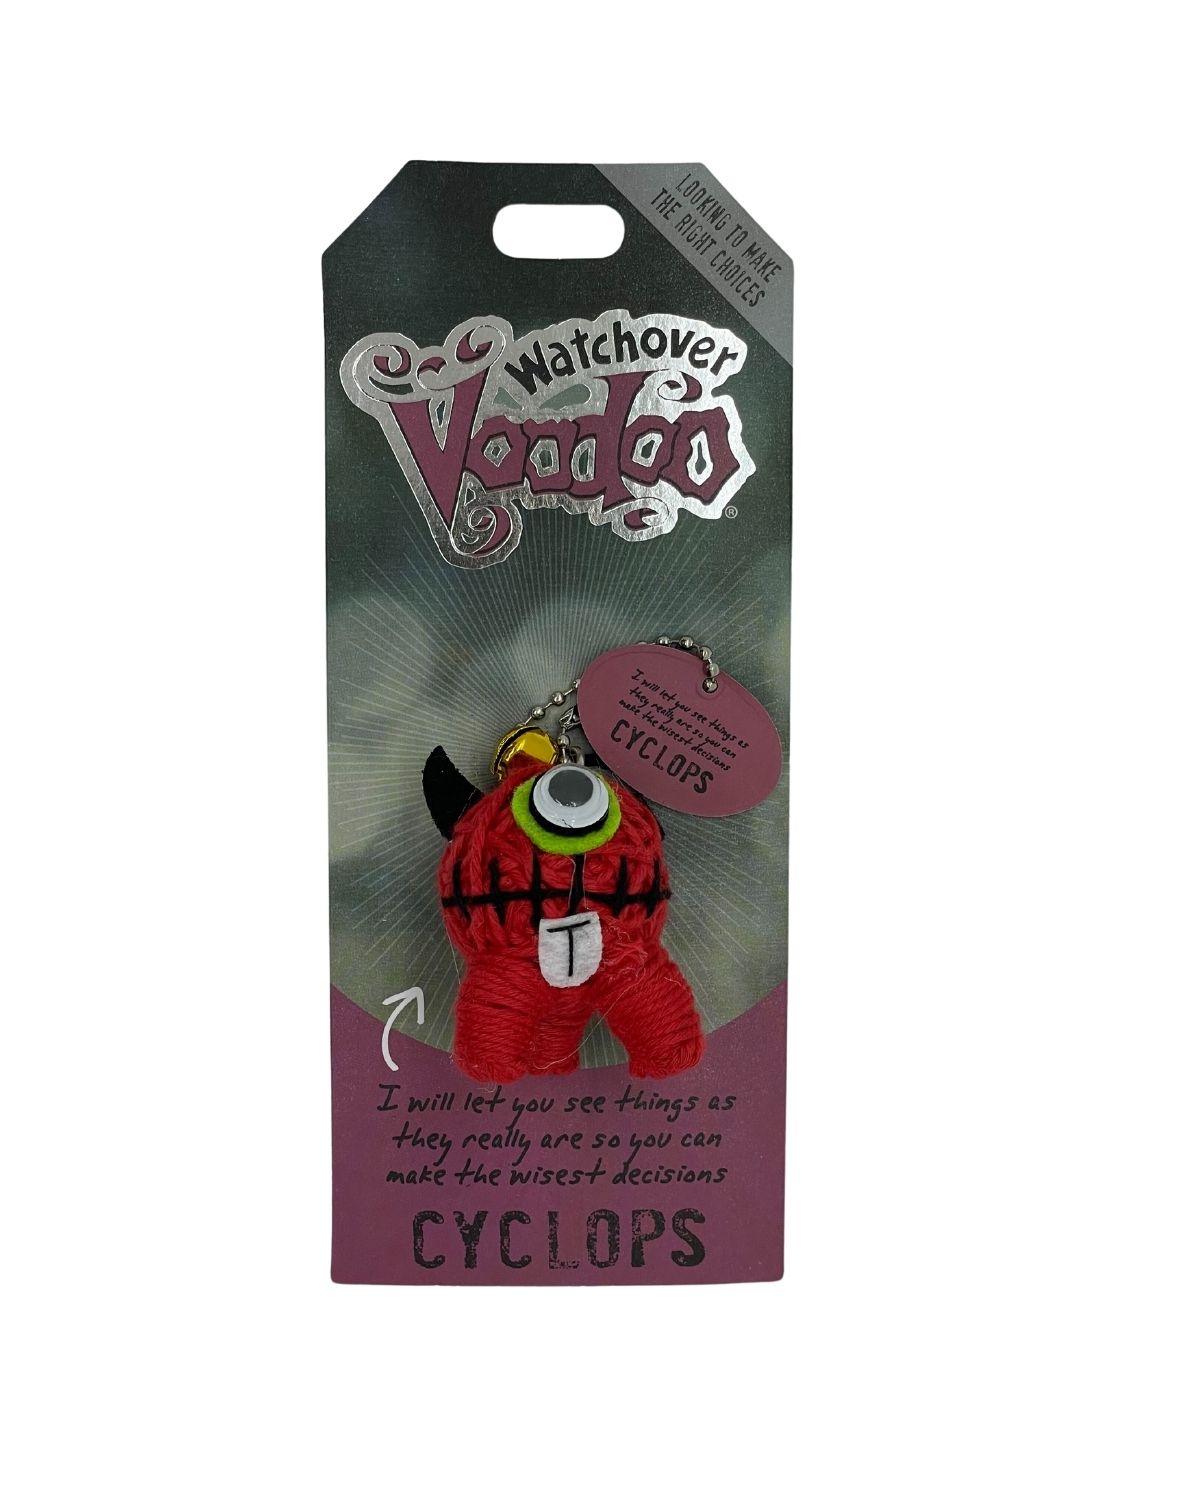 Watchover Voodoo Doll - Cyclops - Watchover Voodoo - String Doll